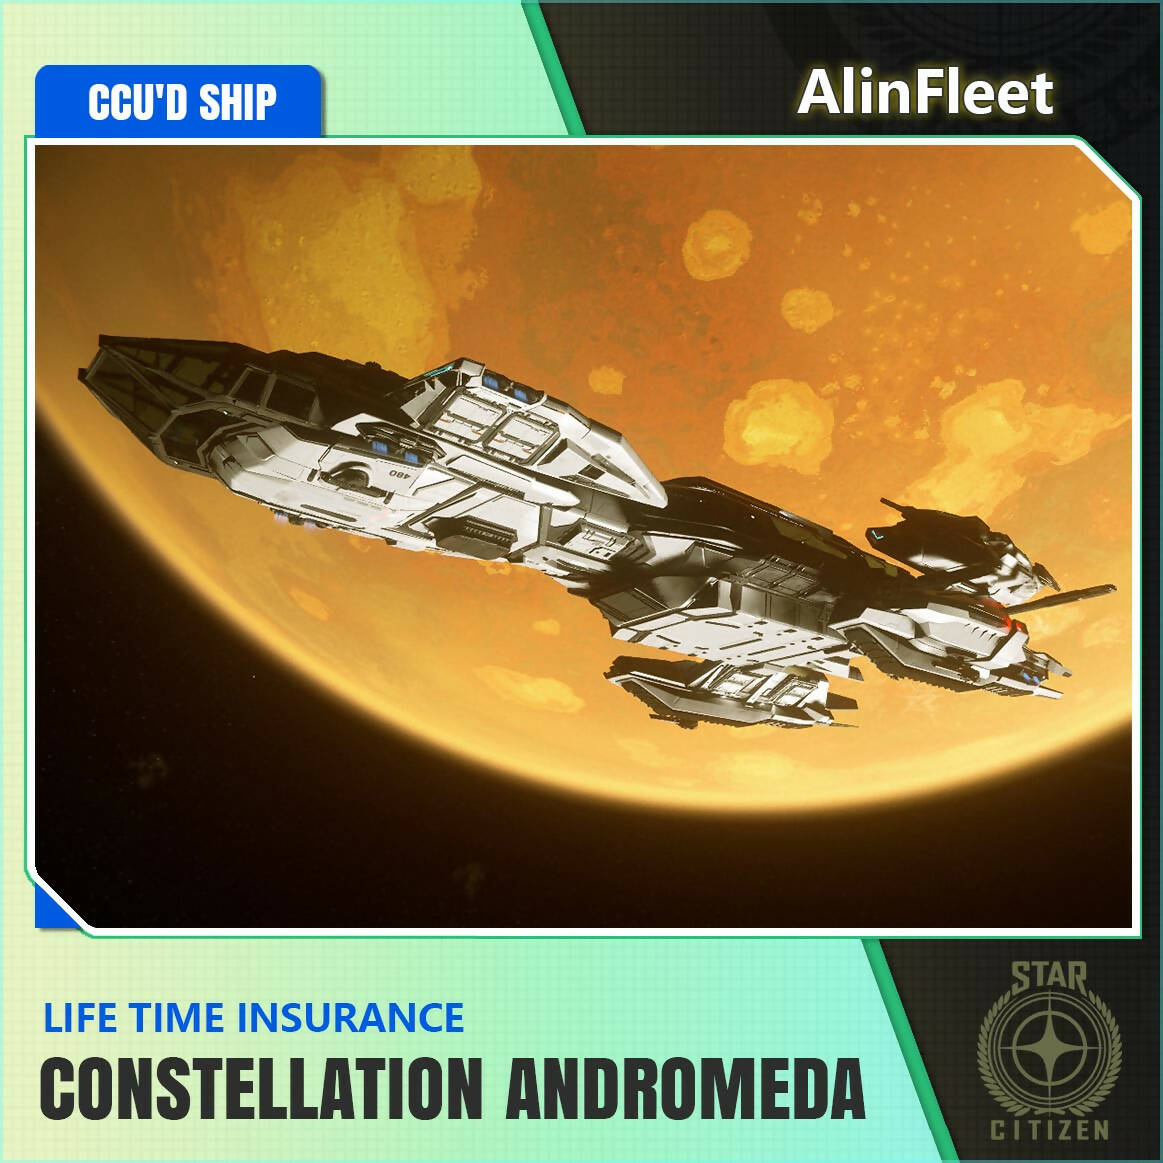 Constellation Andromeda - LTI Insurance - CCU'd Ship